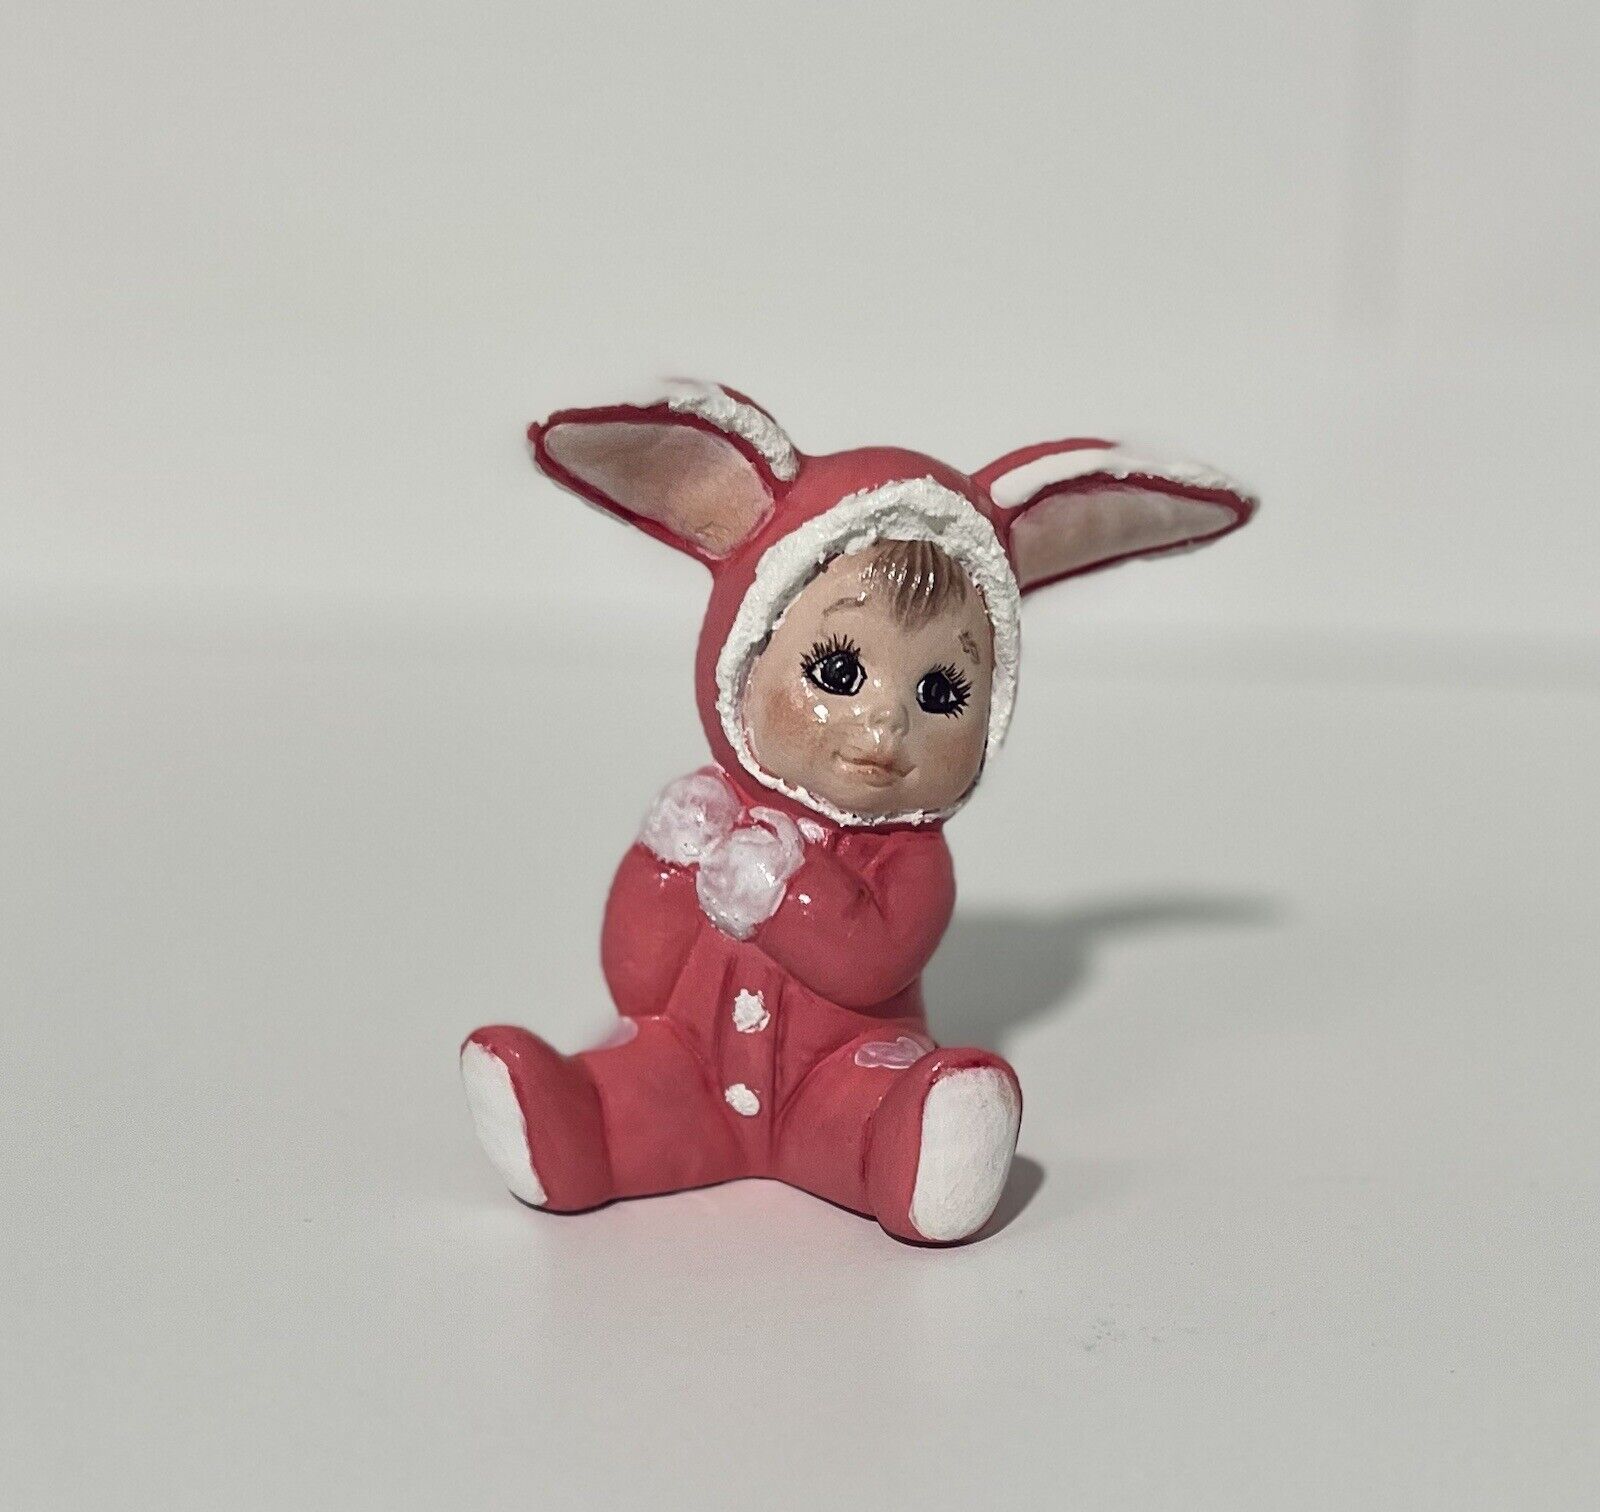 Vintage Handmade Baby bunny costume ceramic figurine Easter Christmas Story Pink